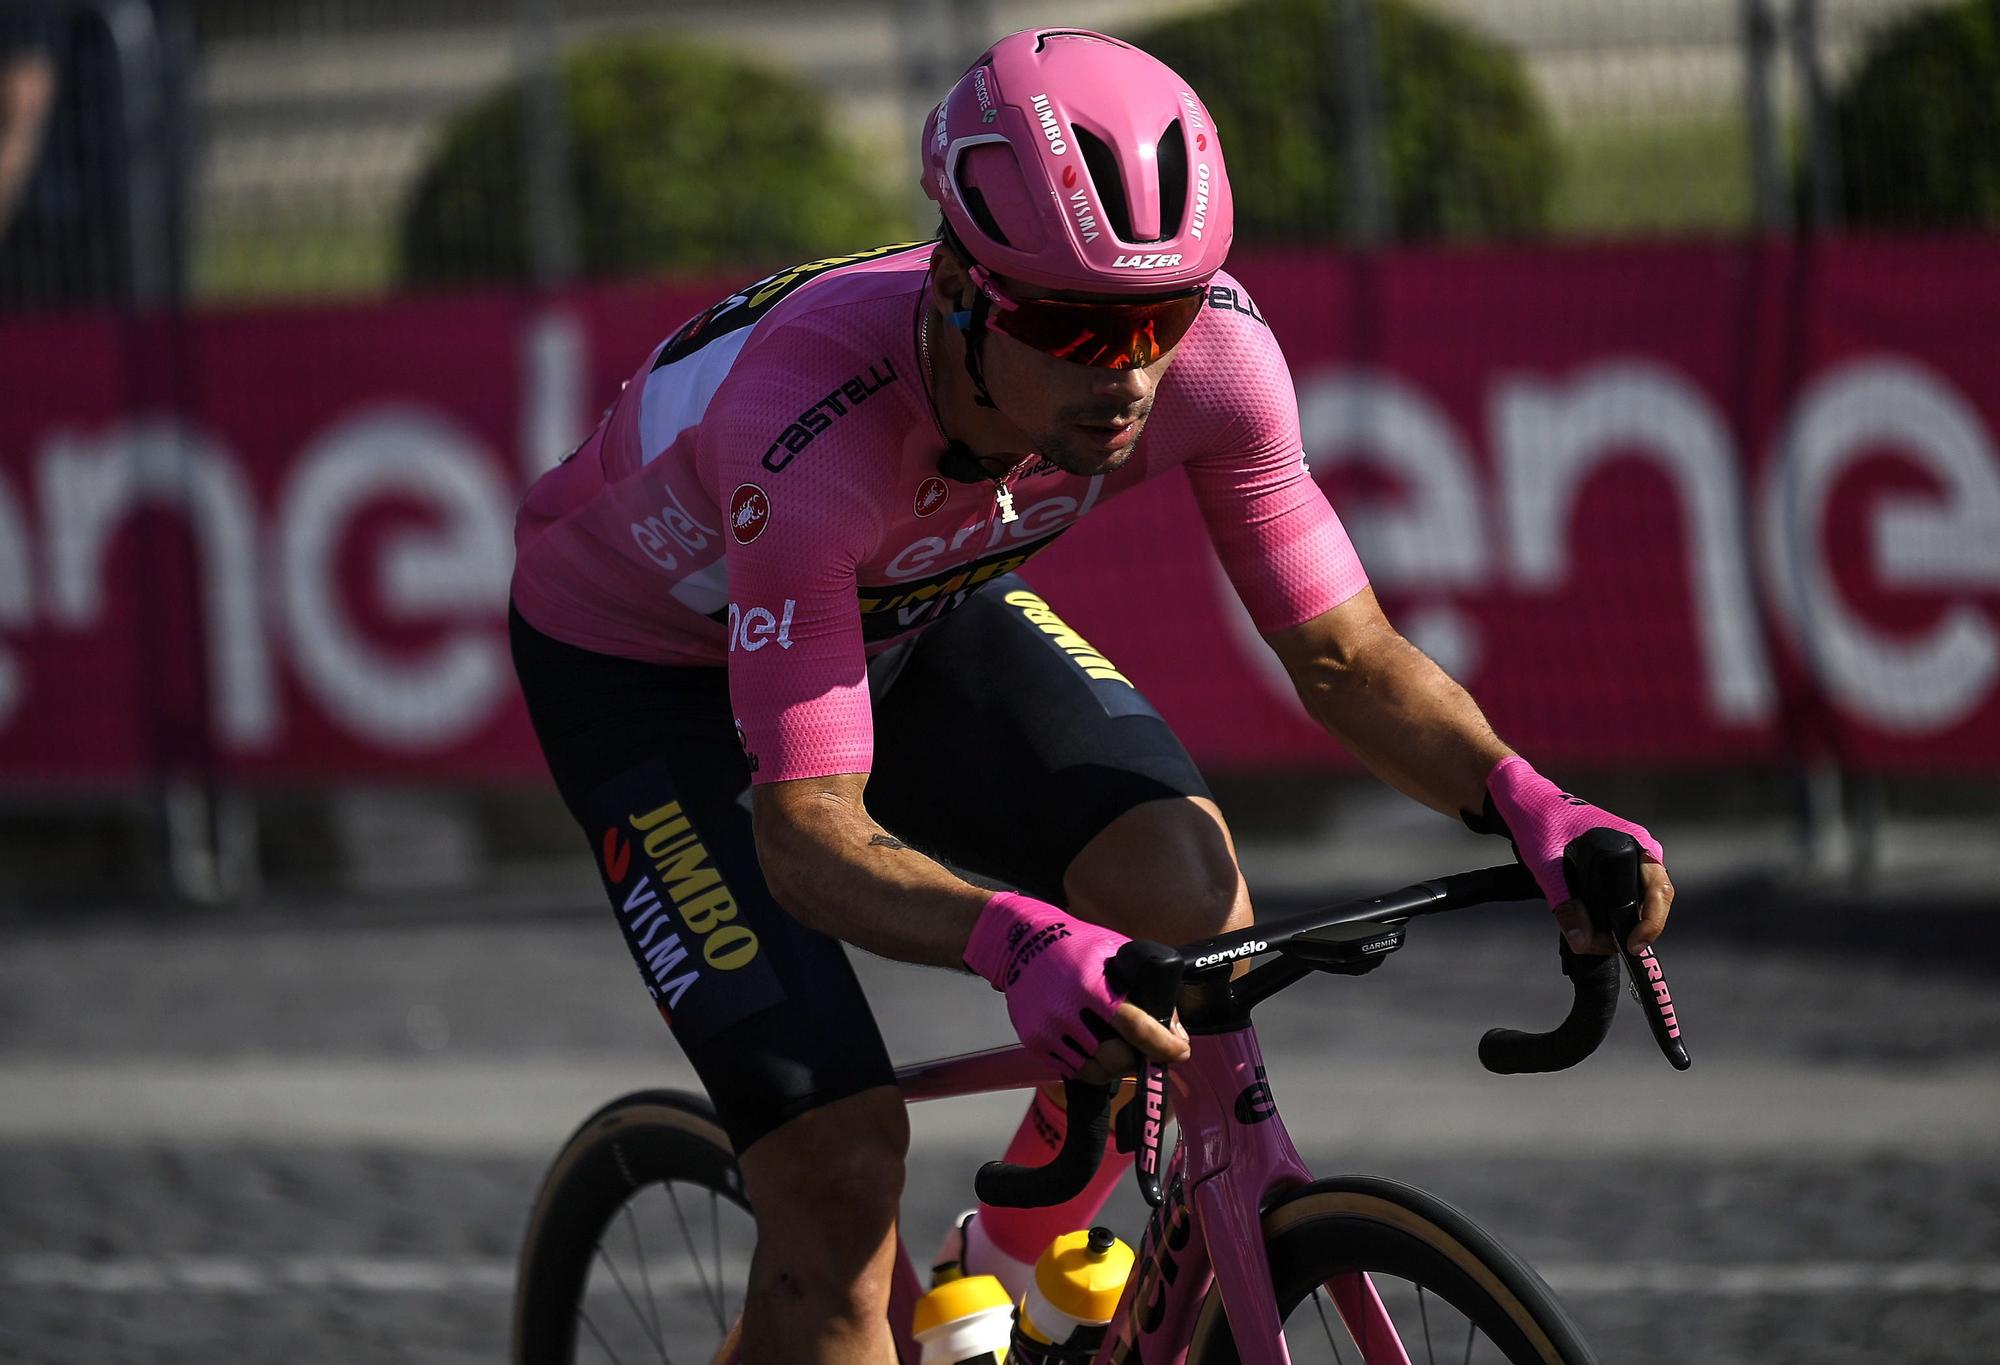 Giro d'Italia - 21st stage